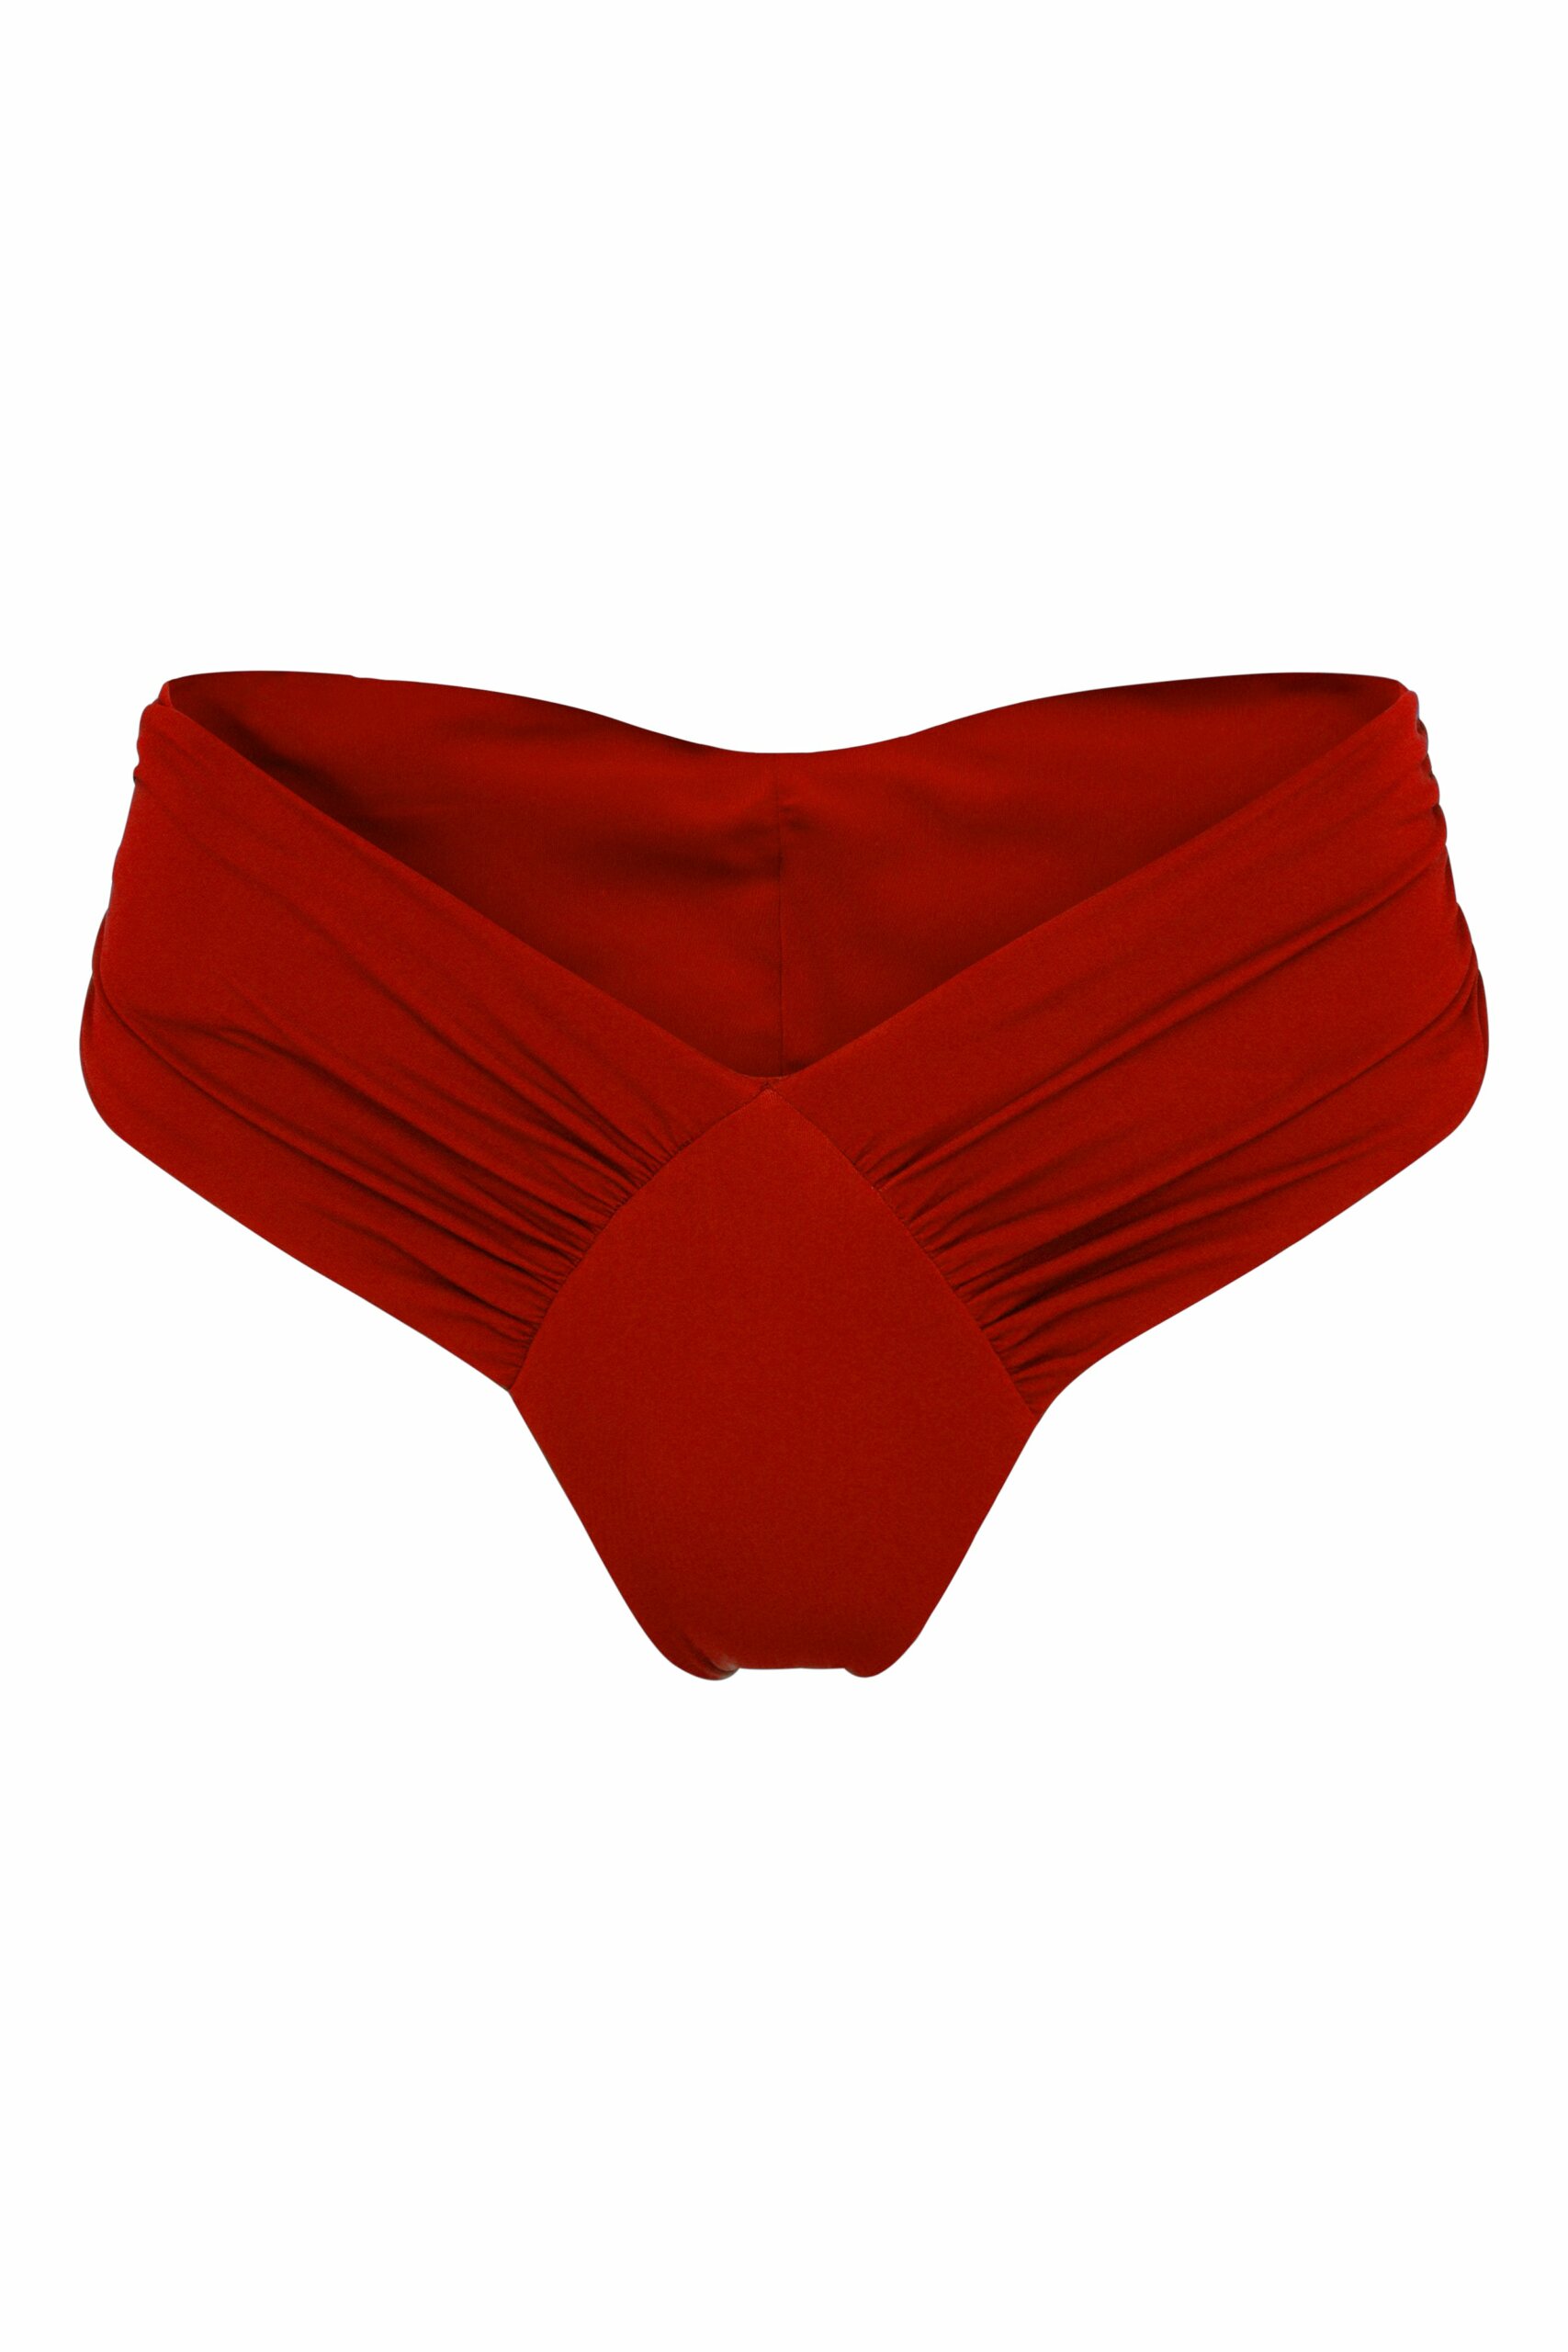 Women's Kami Bikini Bottoms - Red Extra Small F & WILD LONDON